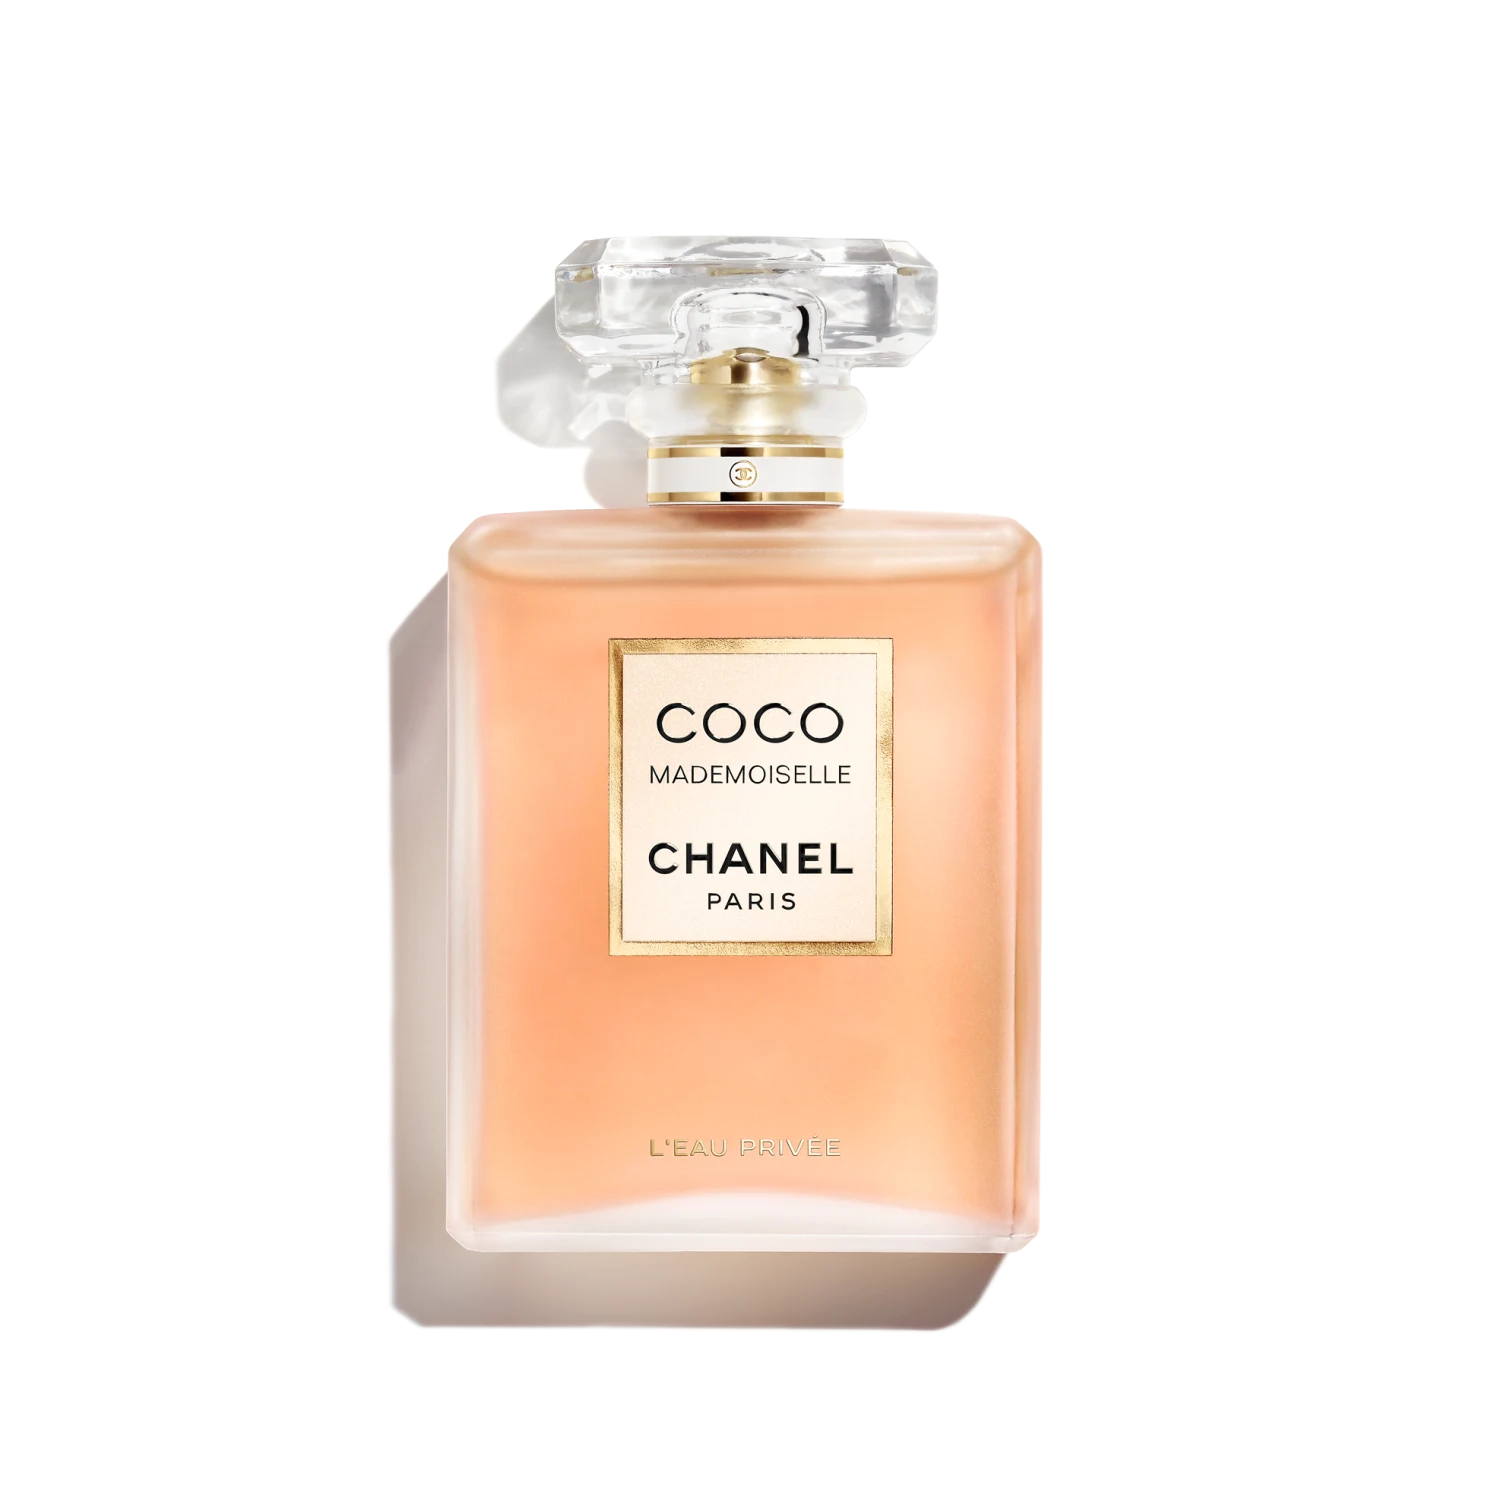 Вода парфюмерная Chanel Coco Mademoiselle L'Eau Privee женская 100 мл